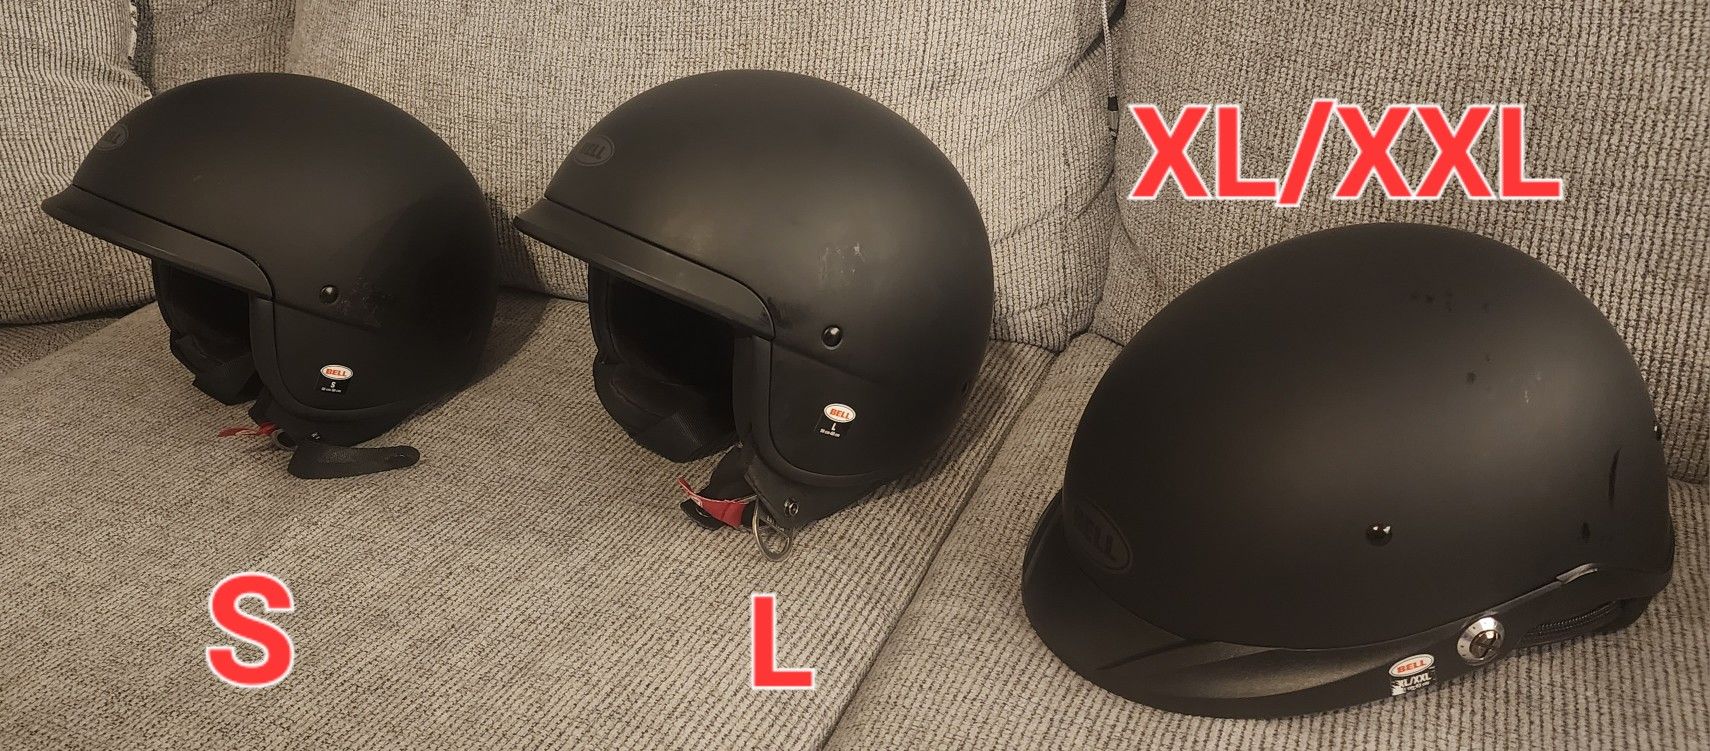 Matte Black Helmets S-XXL